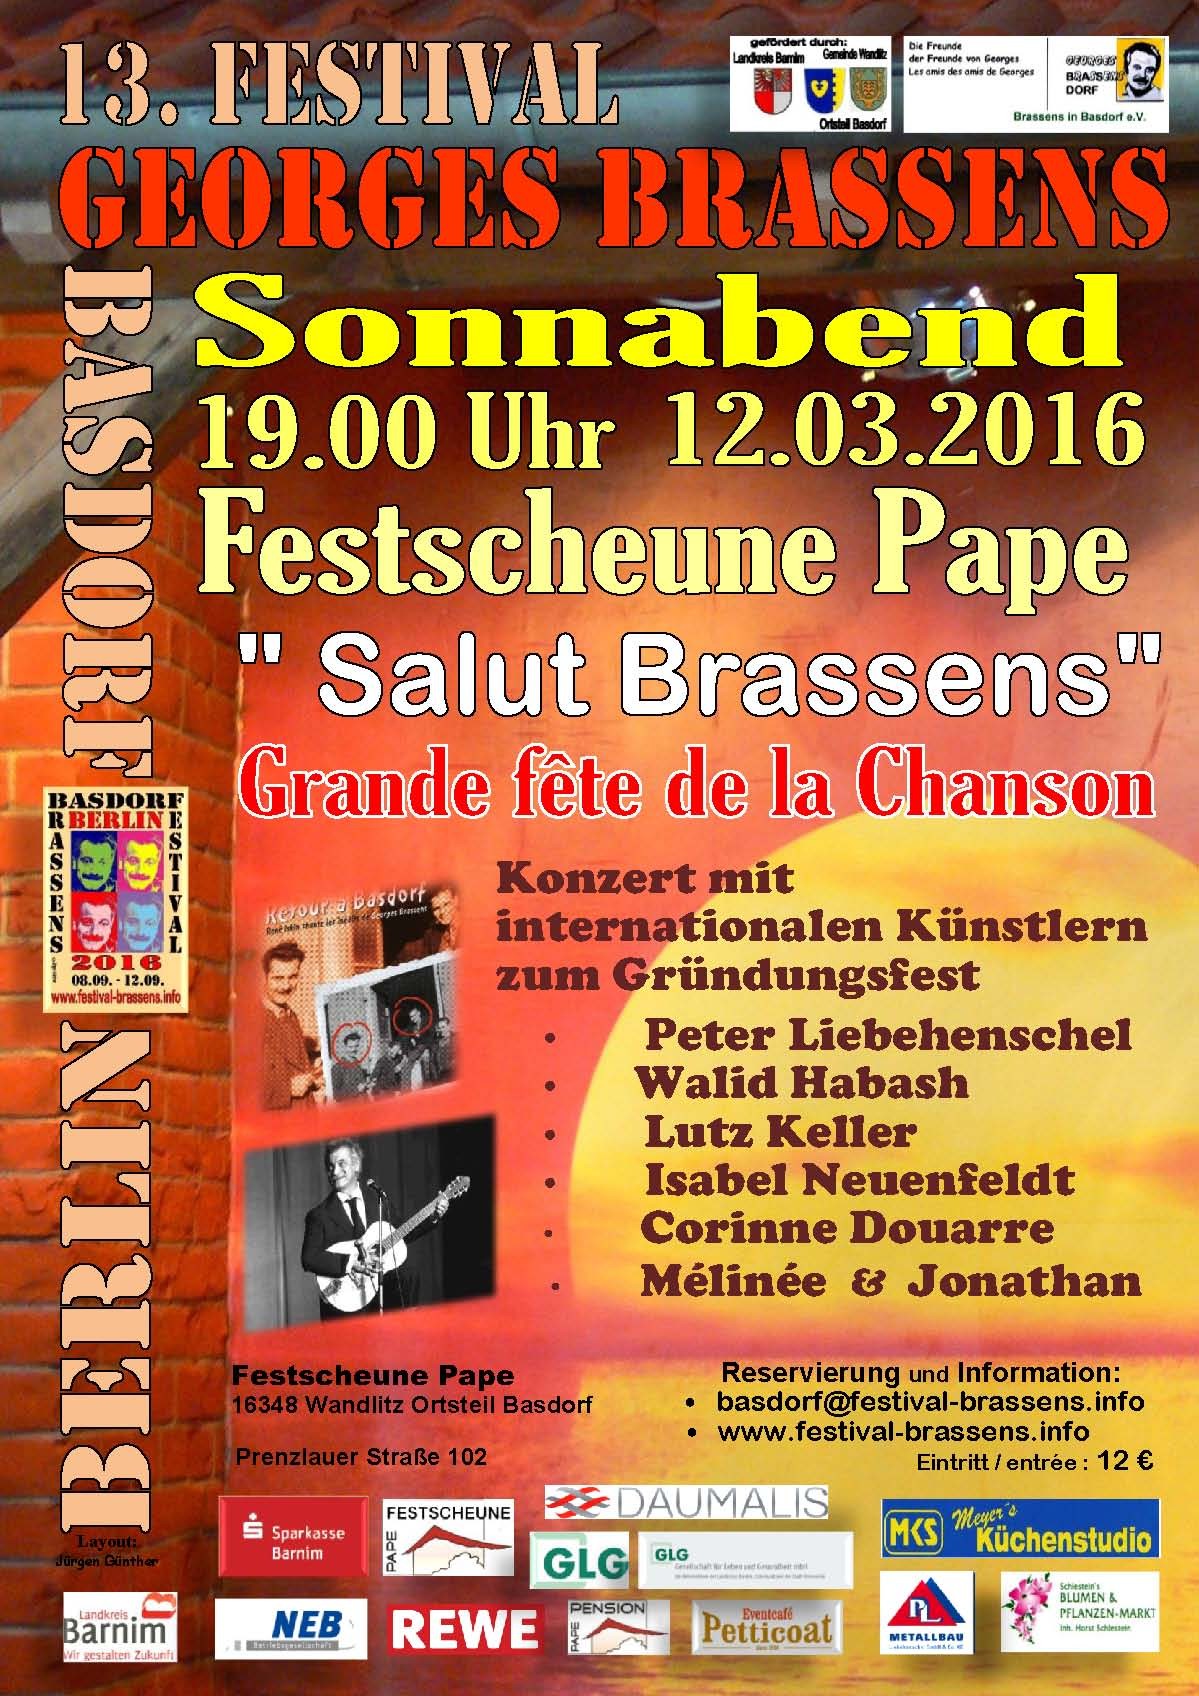 Gründungsfest Brassens in Basdorf e.V.